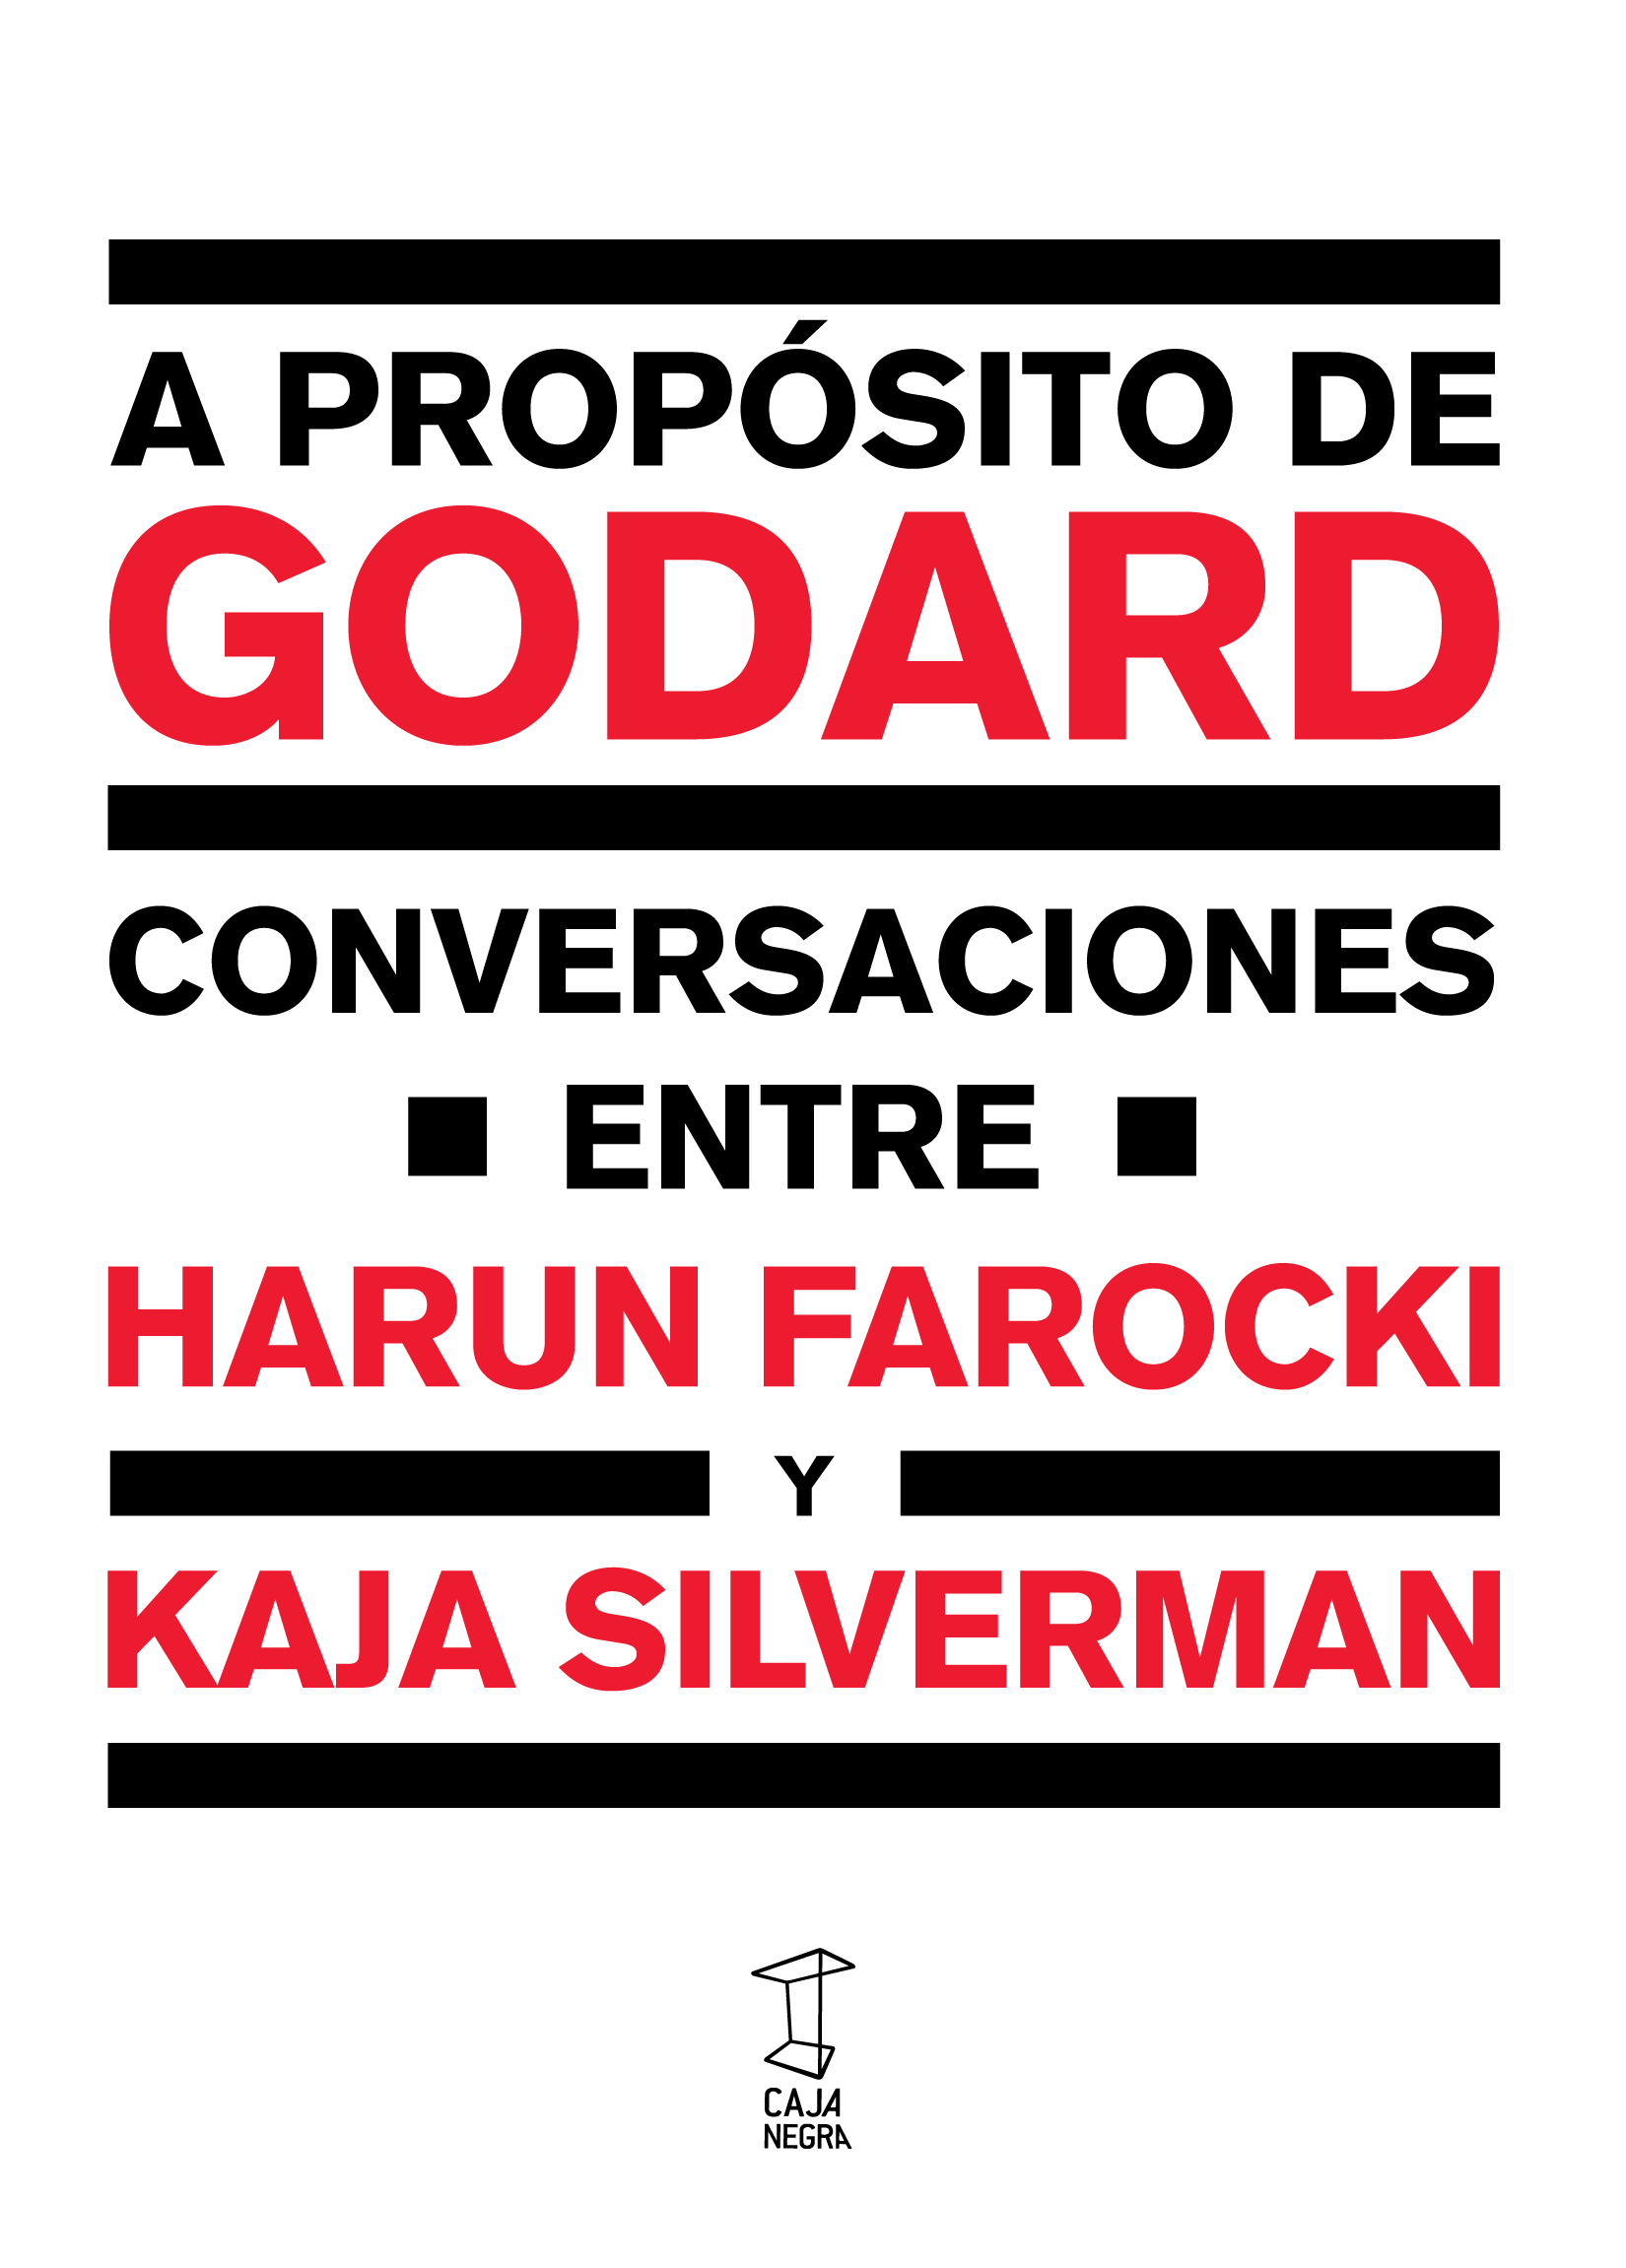 Harun Farocki, A propósito de Godard. Conversaciones entre Harun Farocki y Kaja Silverman, Editorial Caja Negra (2016)